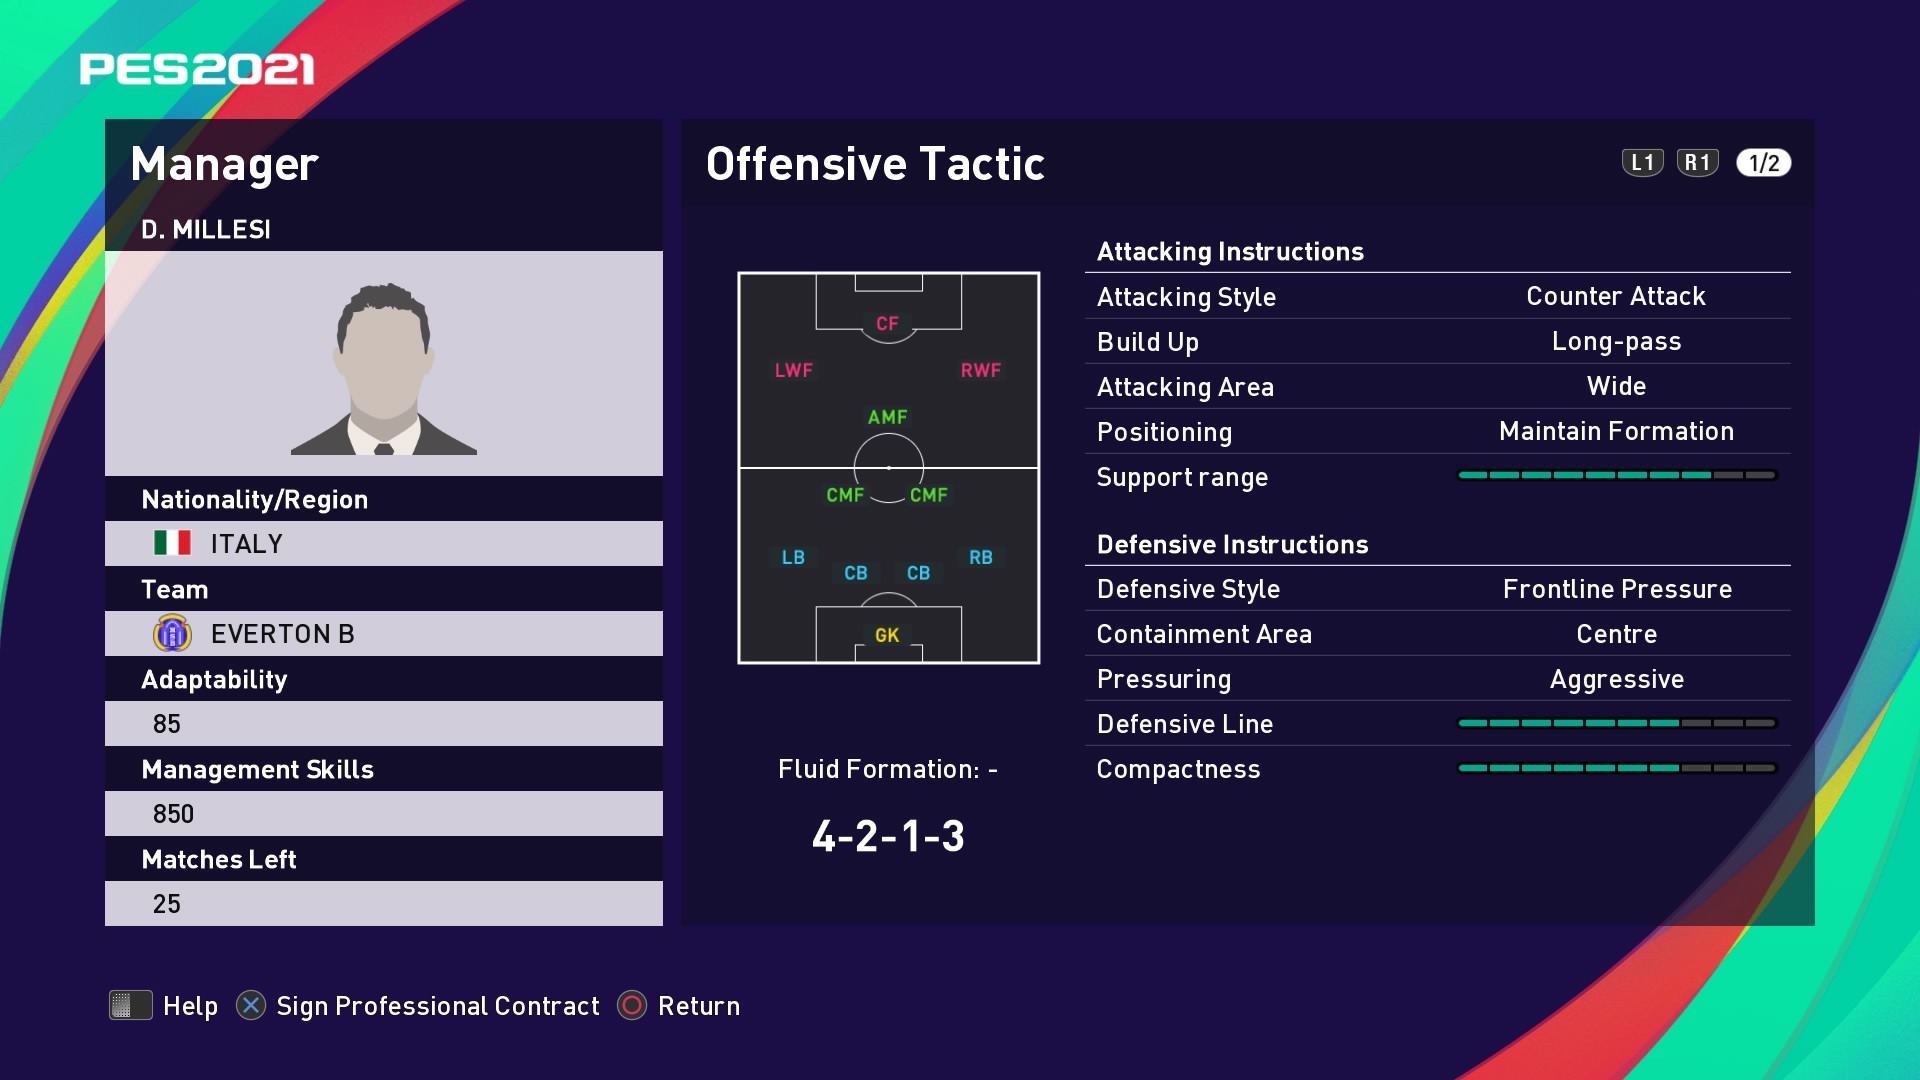 D. Millesi (Carlo Ancelotti) Offensive Tactic in PES 2021 myClub